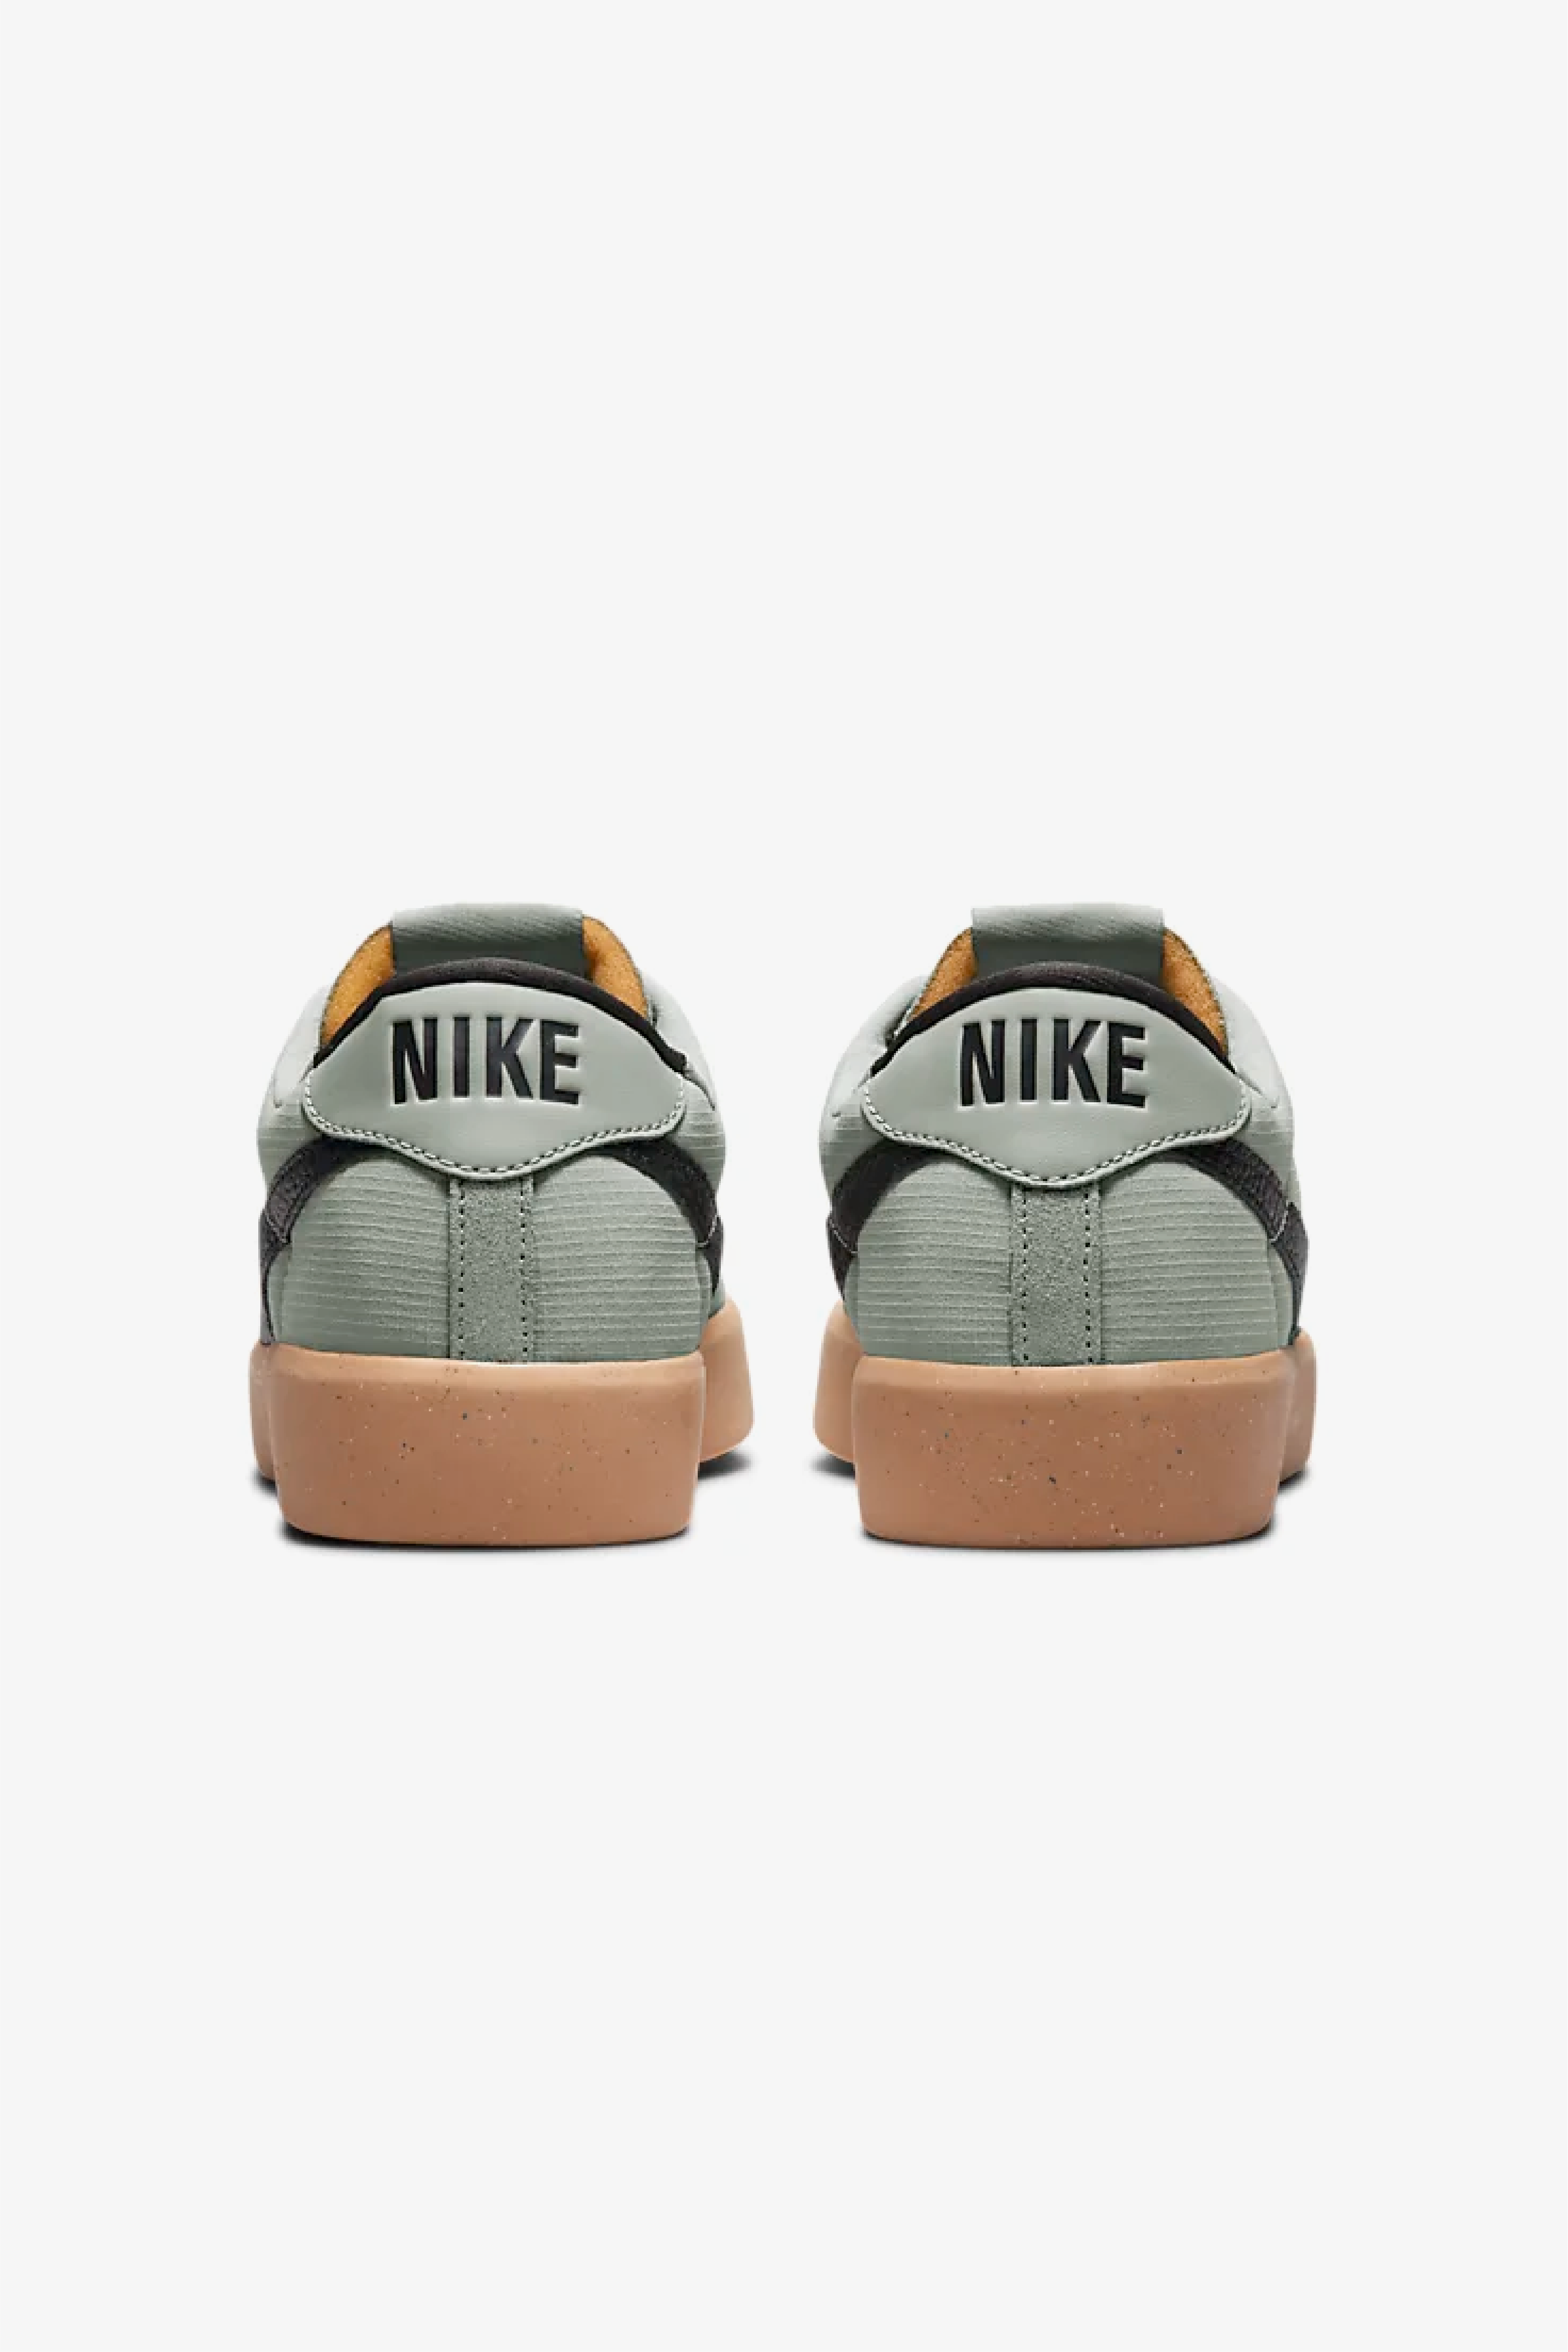 Selectshop FRAME - NIKE SB Nike SB Bruin React "Jade Smoke" Footwear Dubai